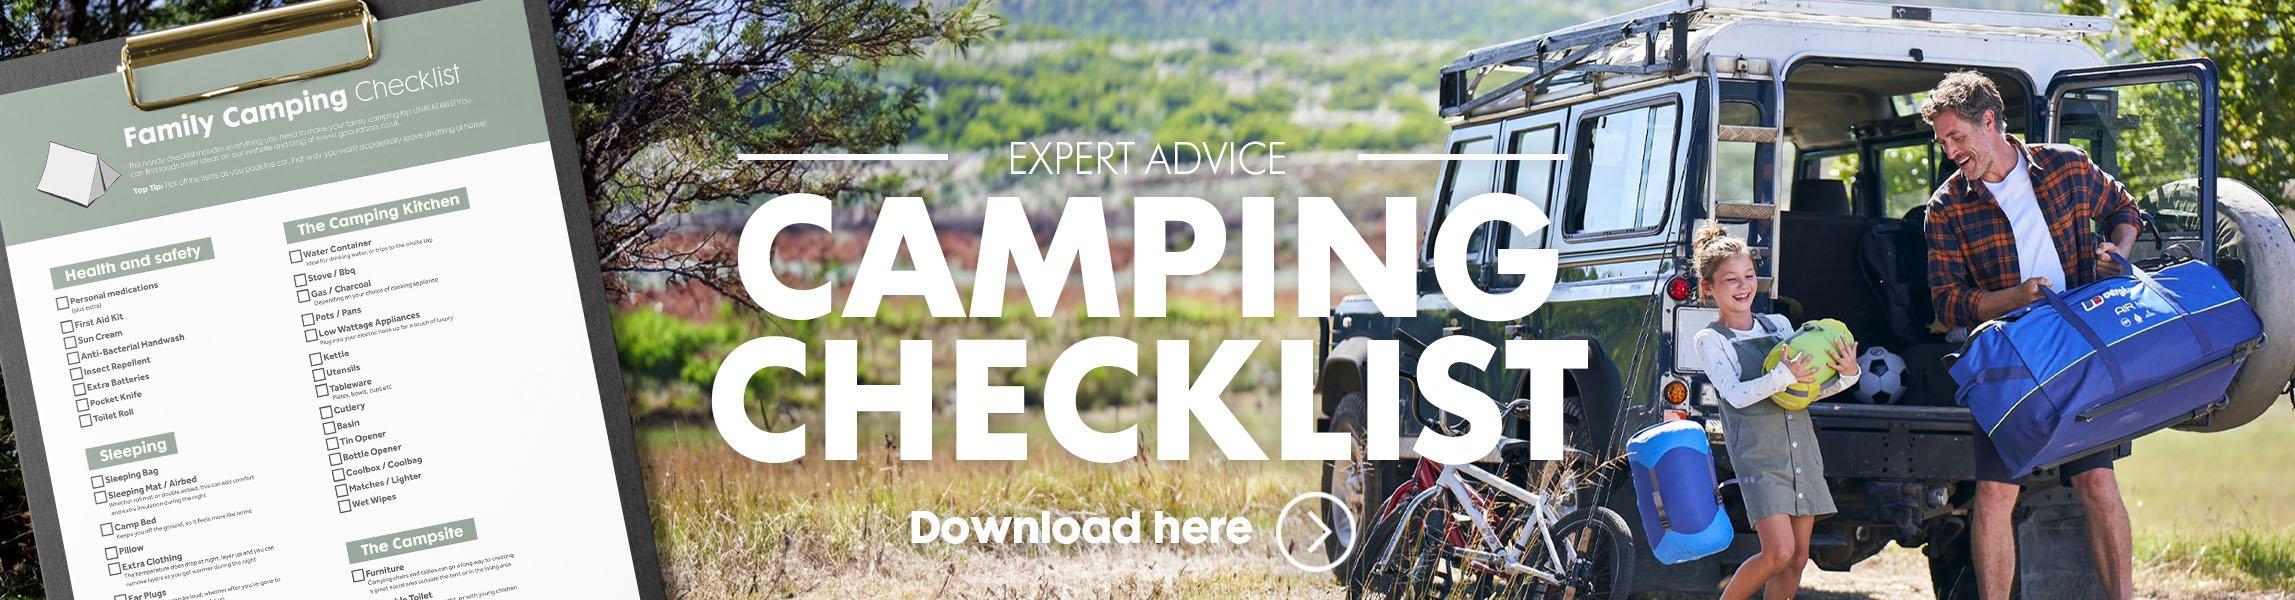 Family Camping Essentials Checklist